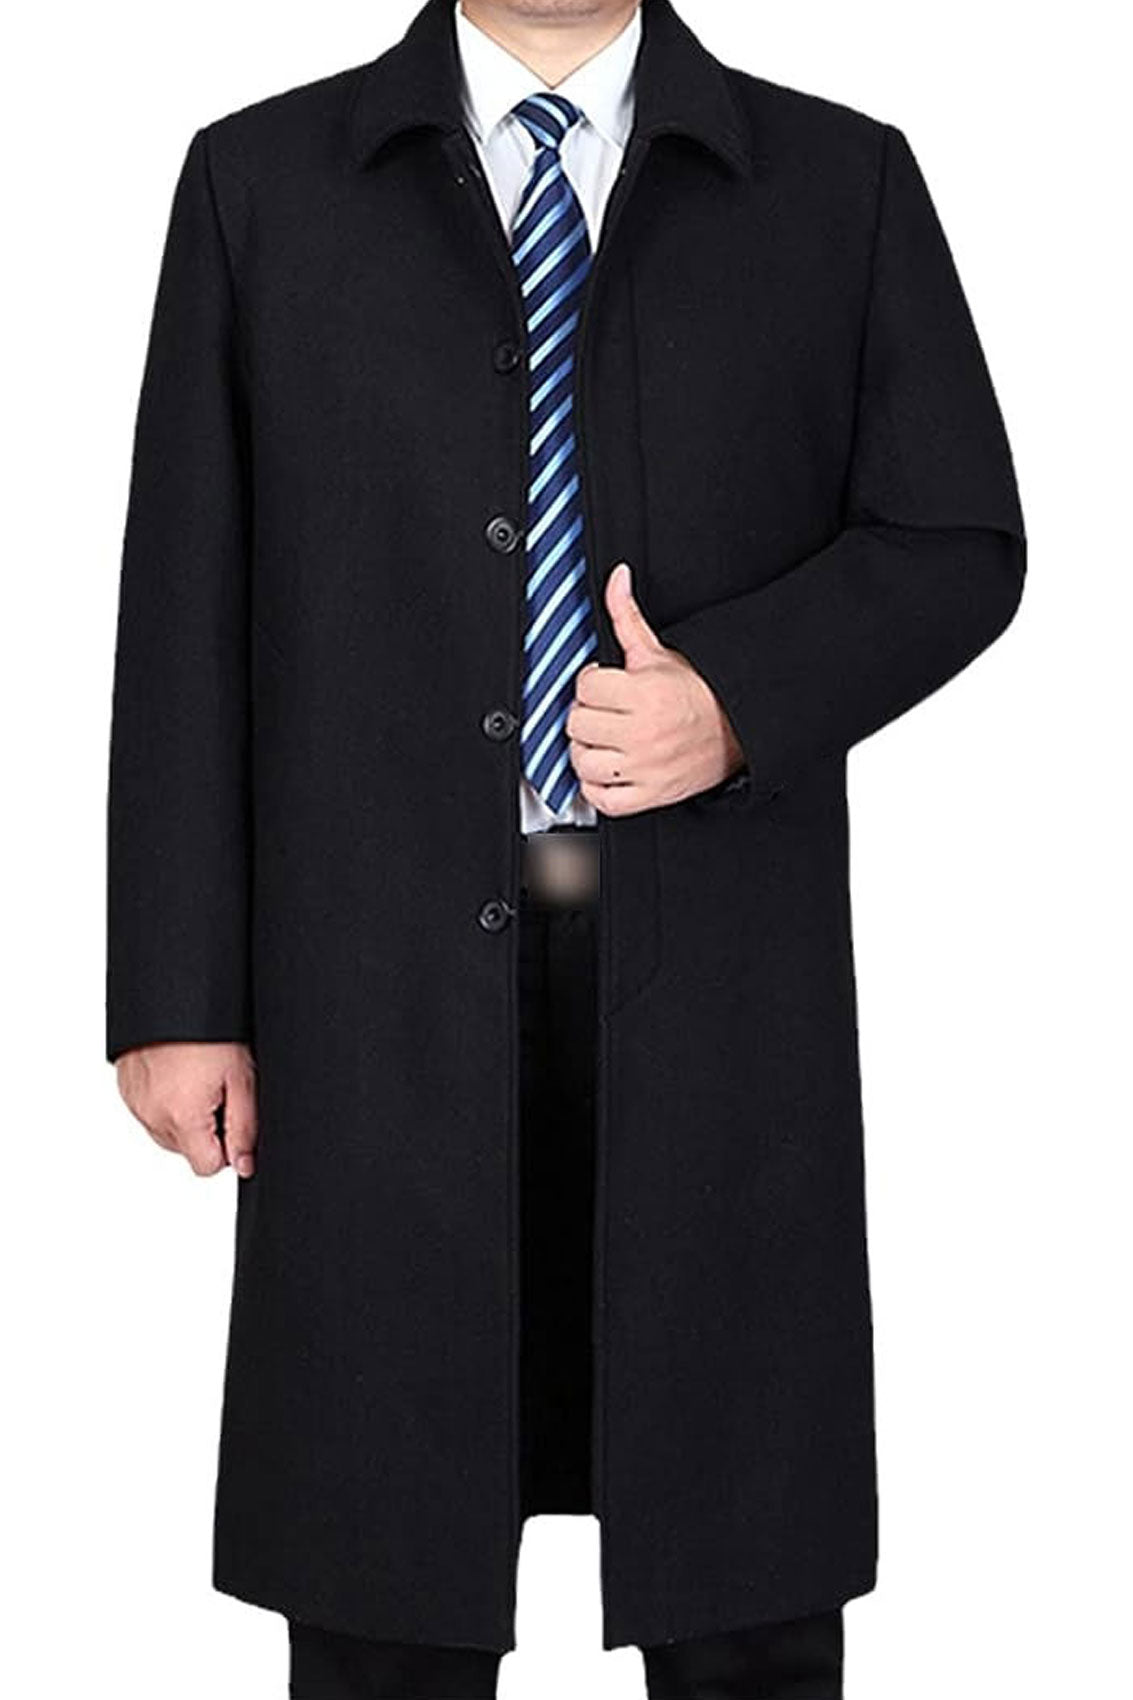 Classic Black Winter Overcoat with Turndown Collar - Brand New